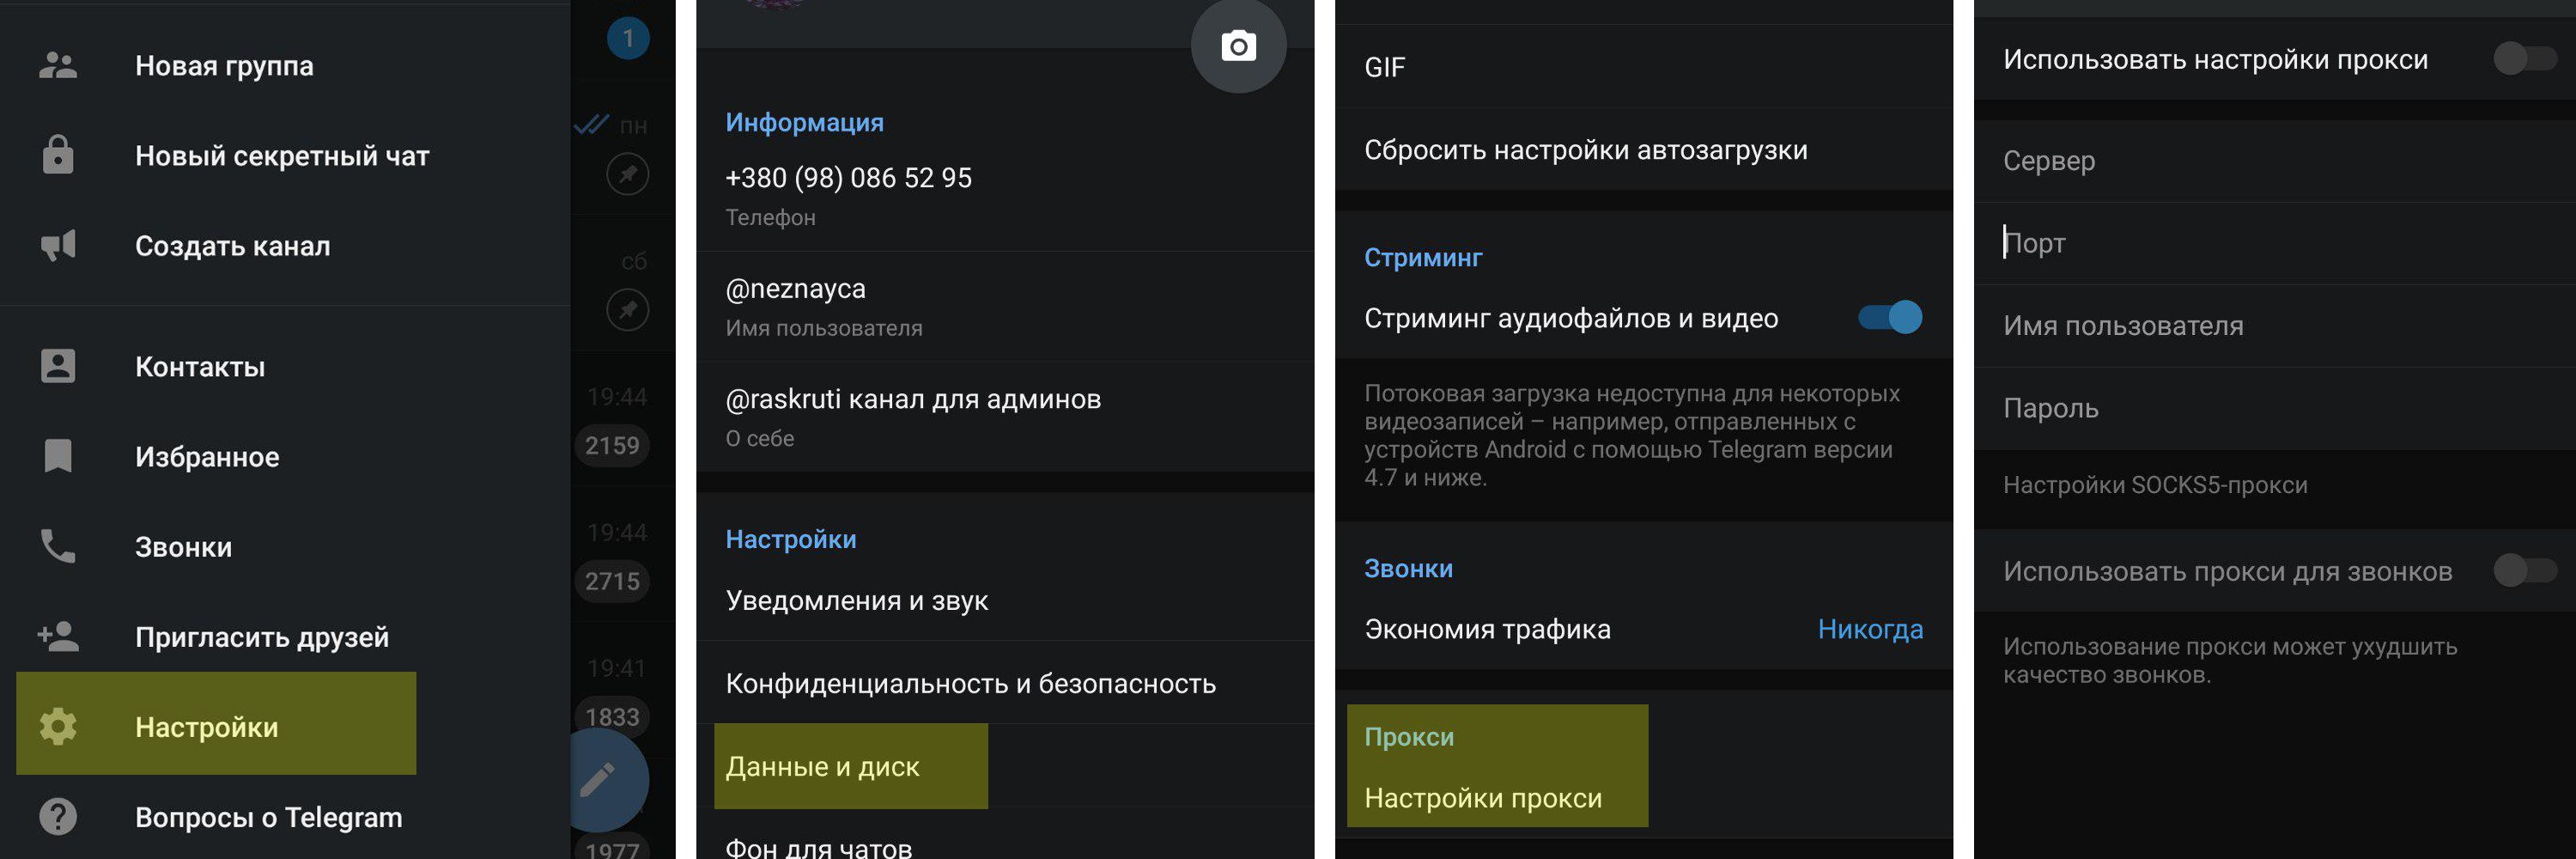 Настройка телеграмм на андроид на русском языке фото 72